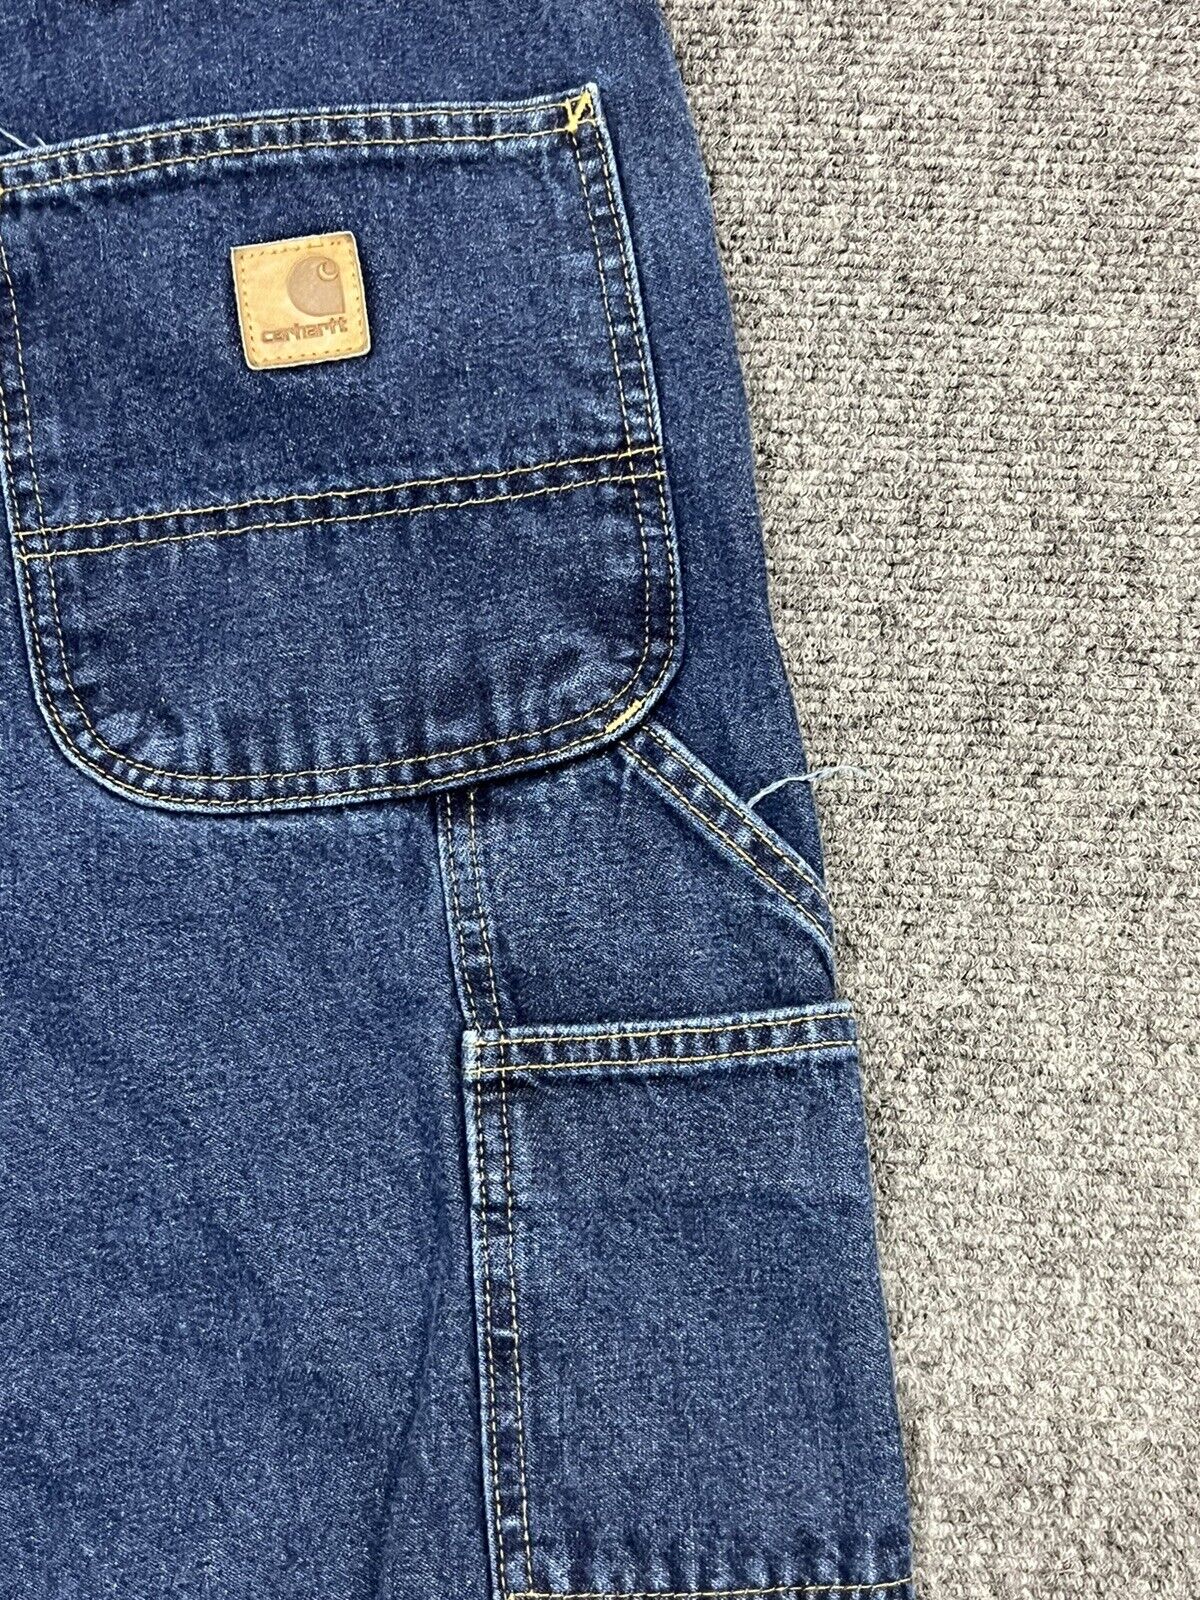 Carhartt Mens Carpenter Denim Jeans • 42x34 Preow… - image 6